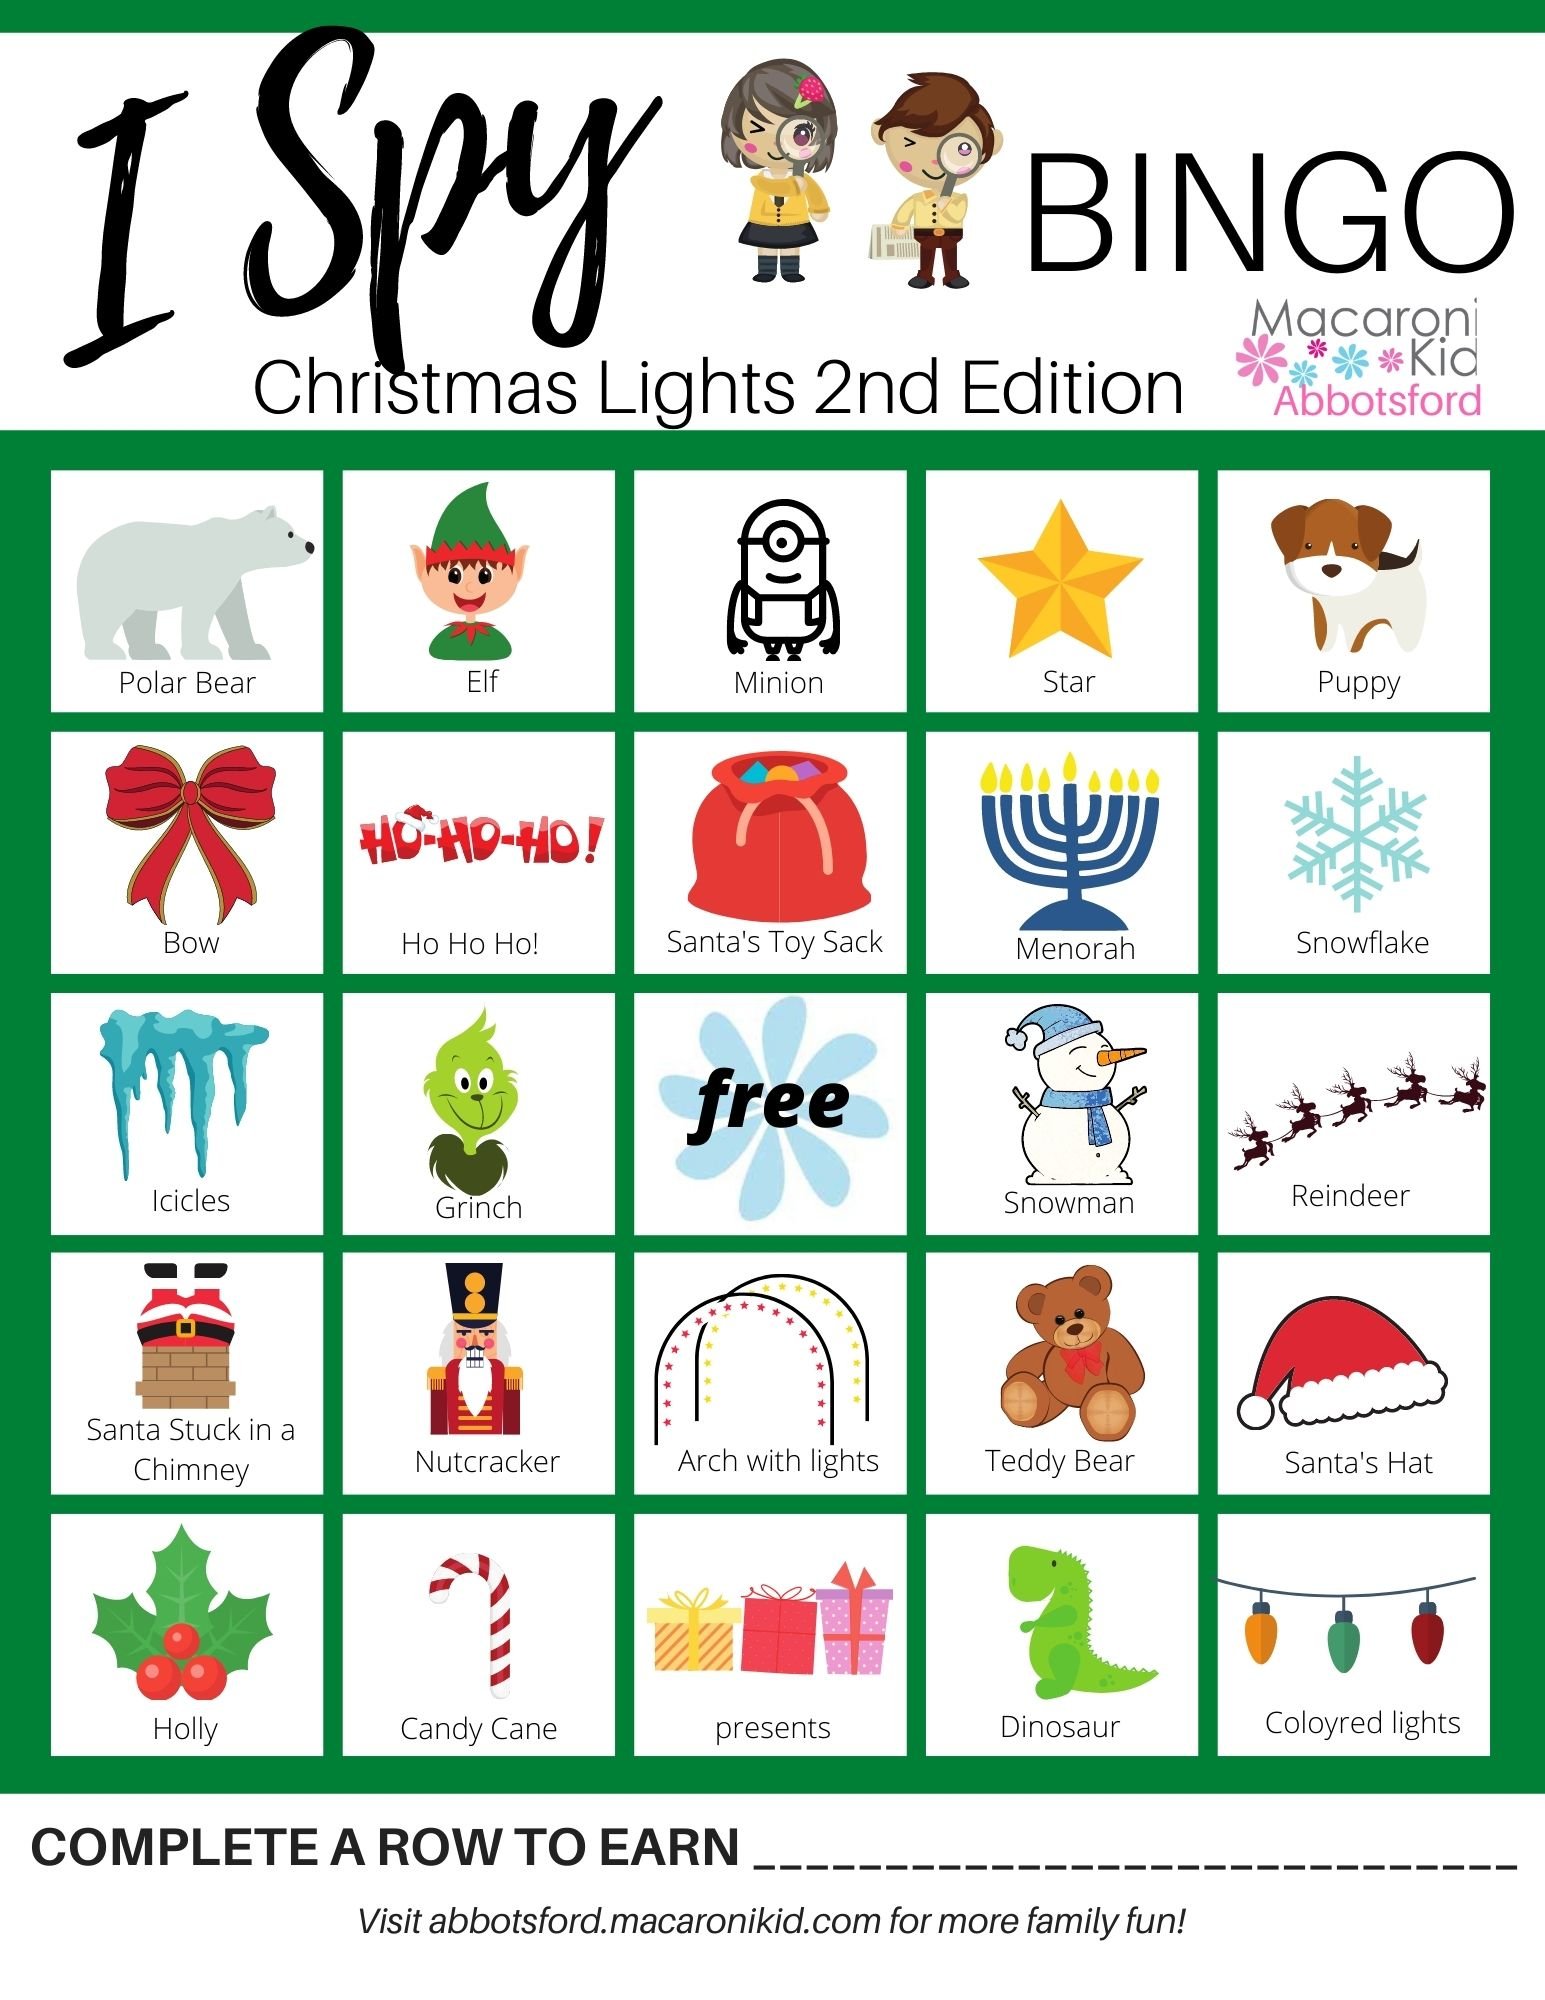 christmas-lights-i-spy-bingo-2nd-edition-macaroni-kid-abbotsford